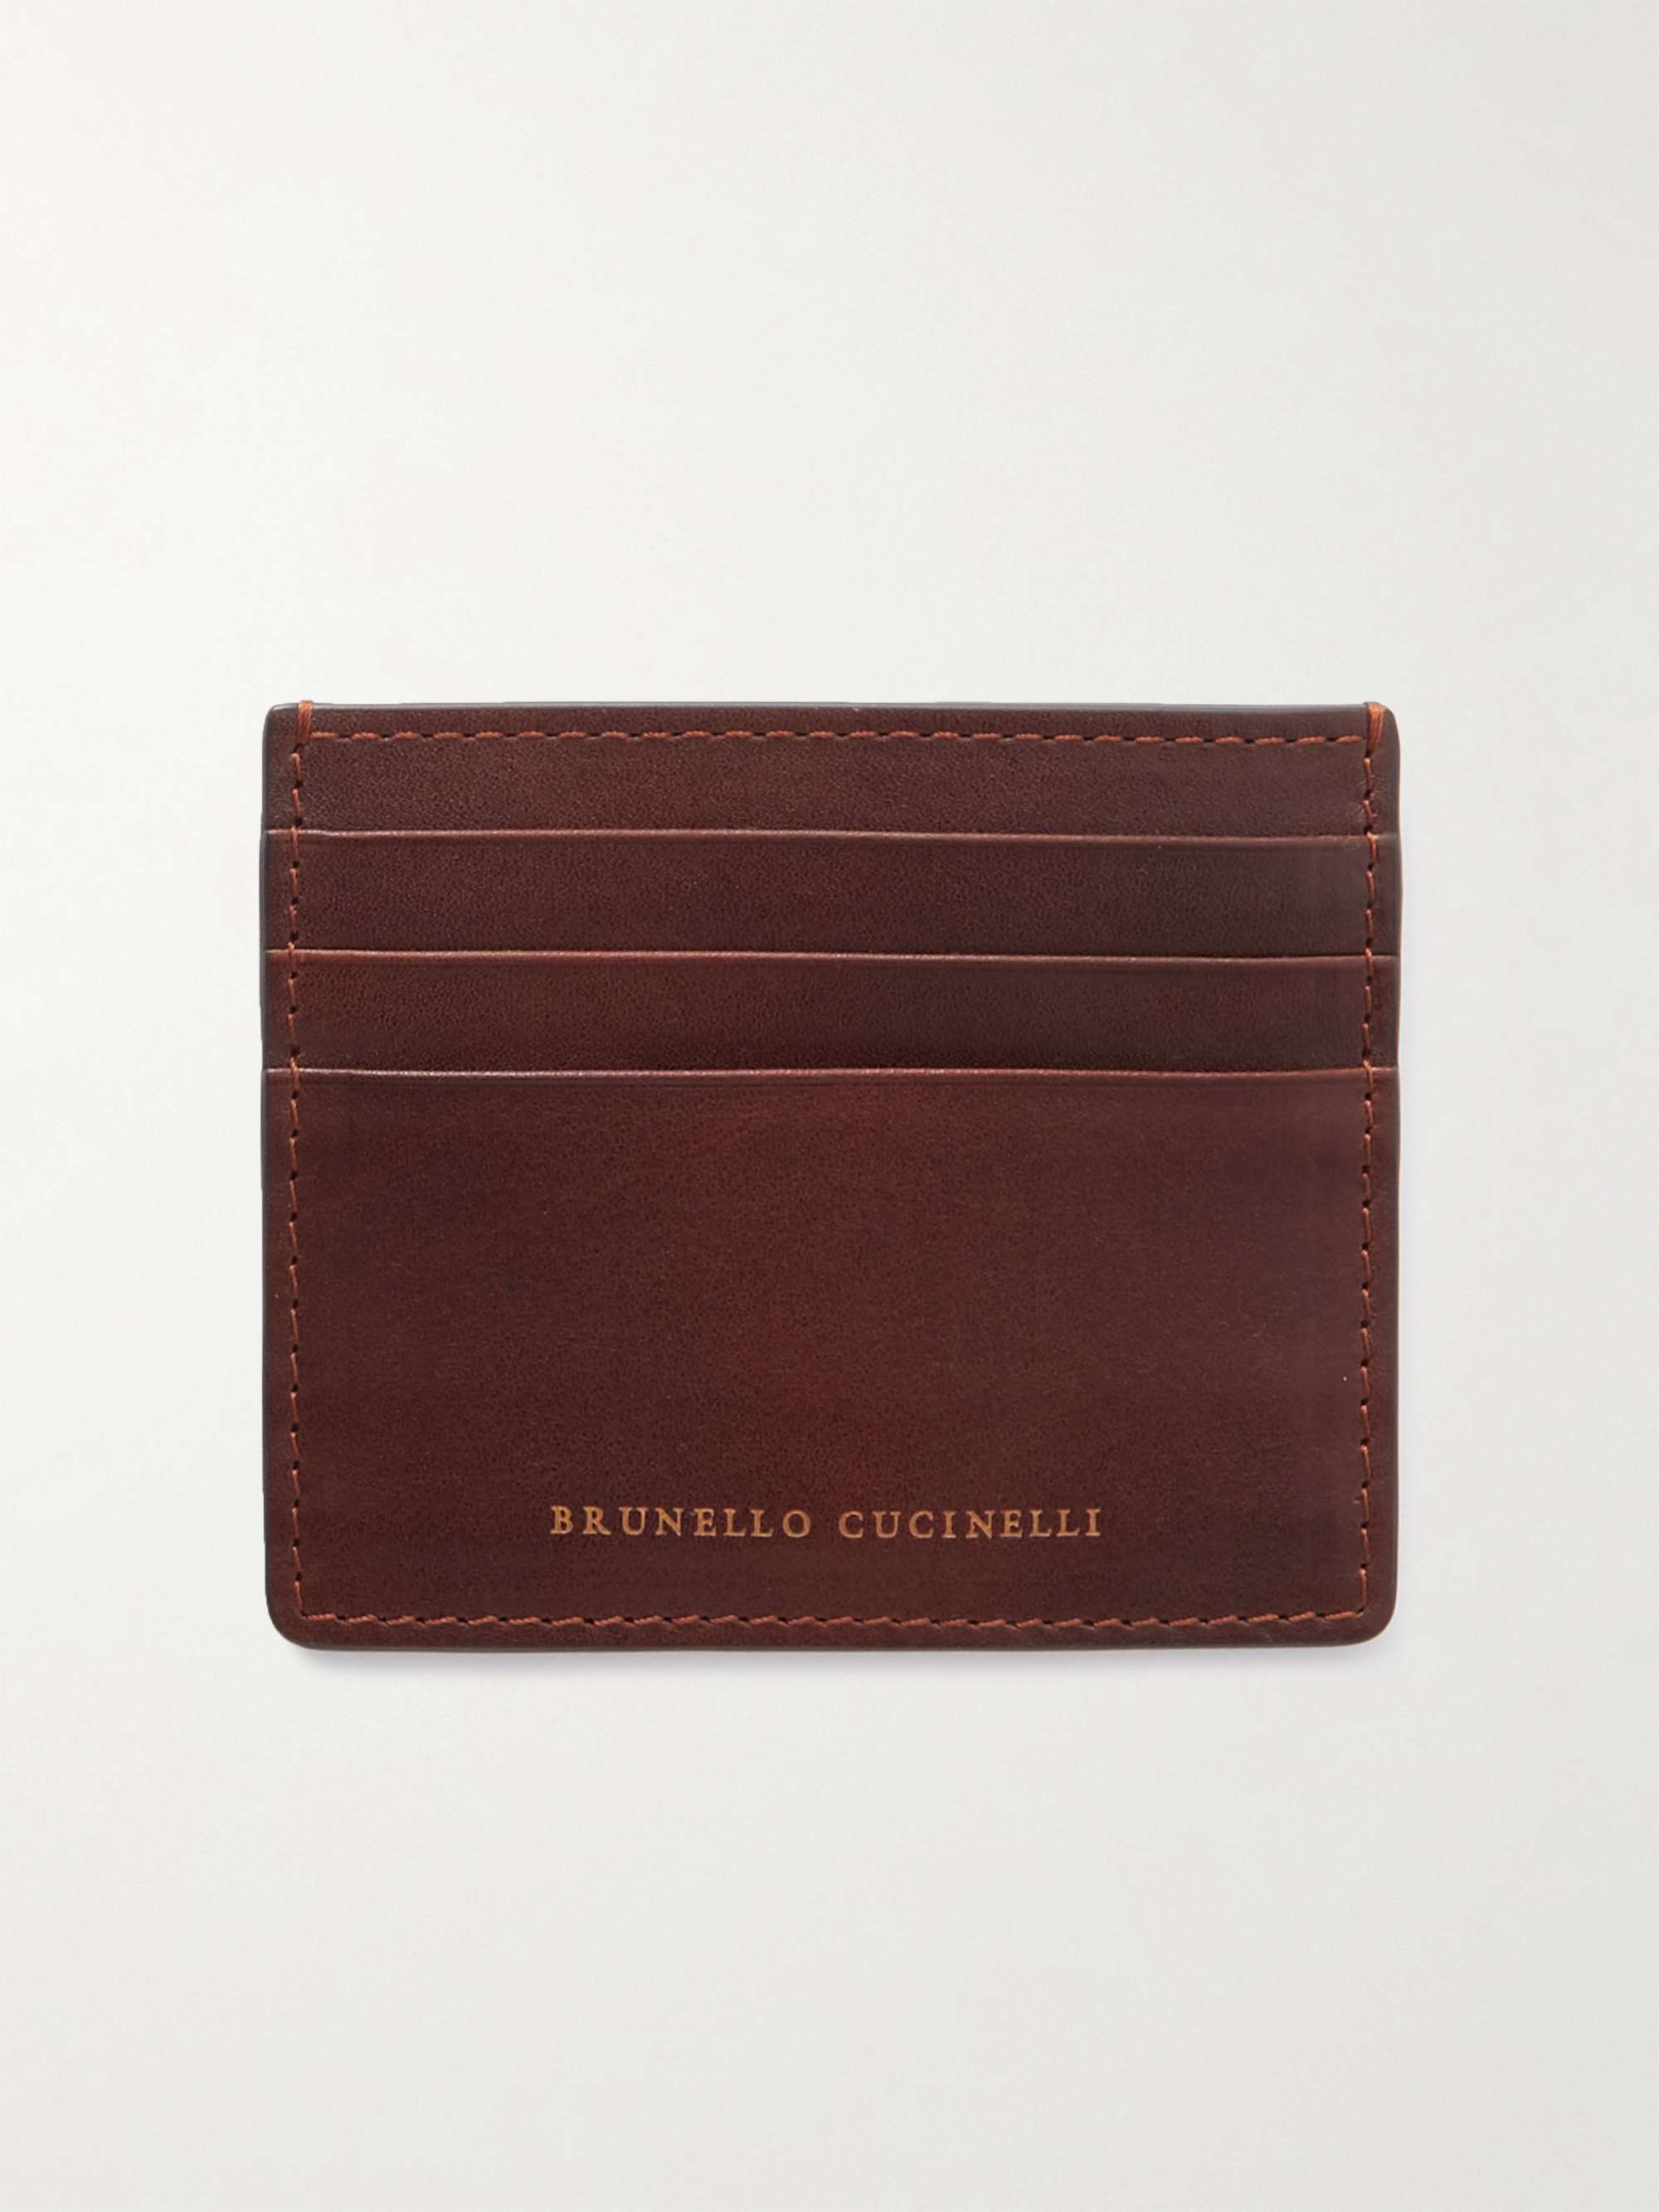 BRUNELLO CUCINELLI Leather Cardholder